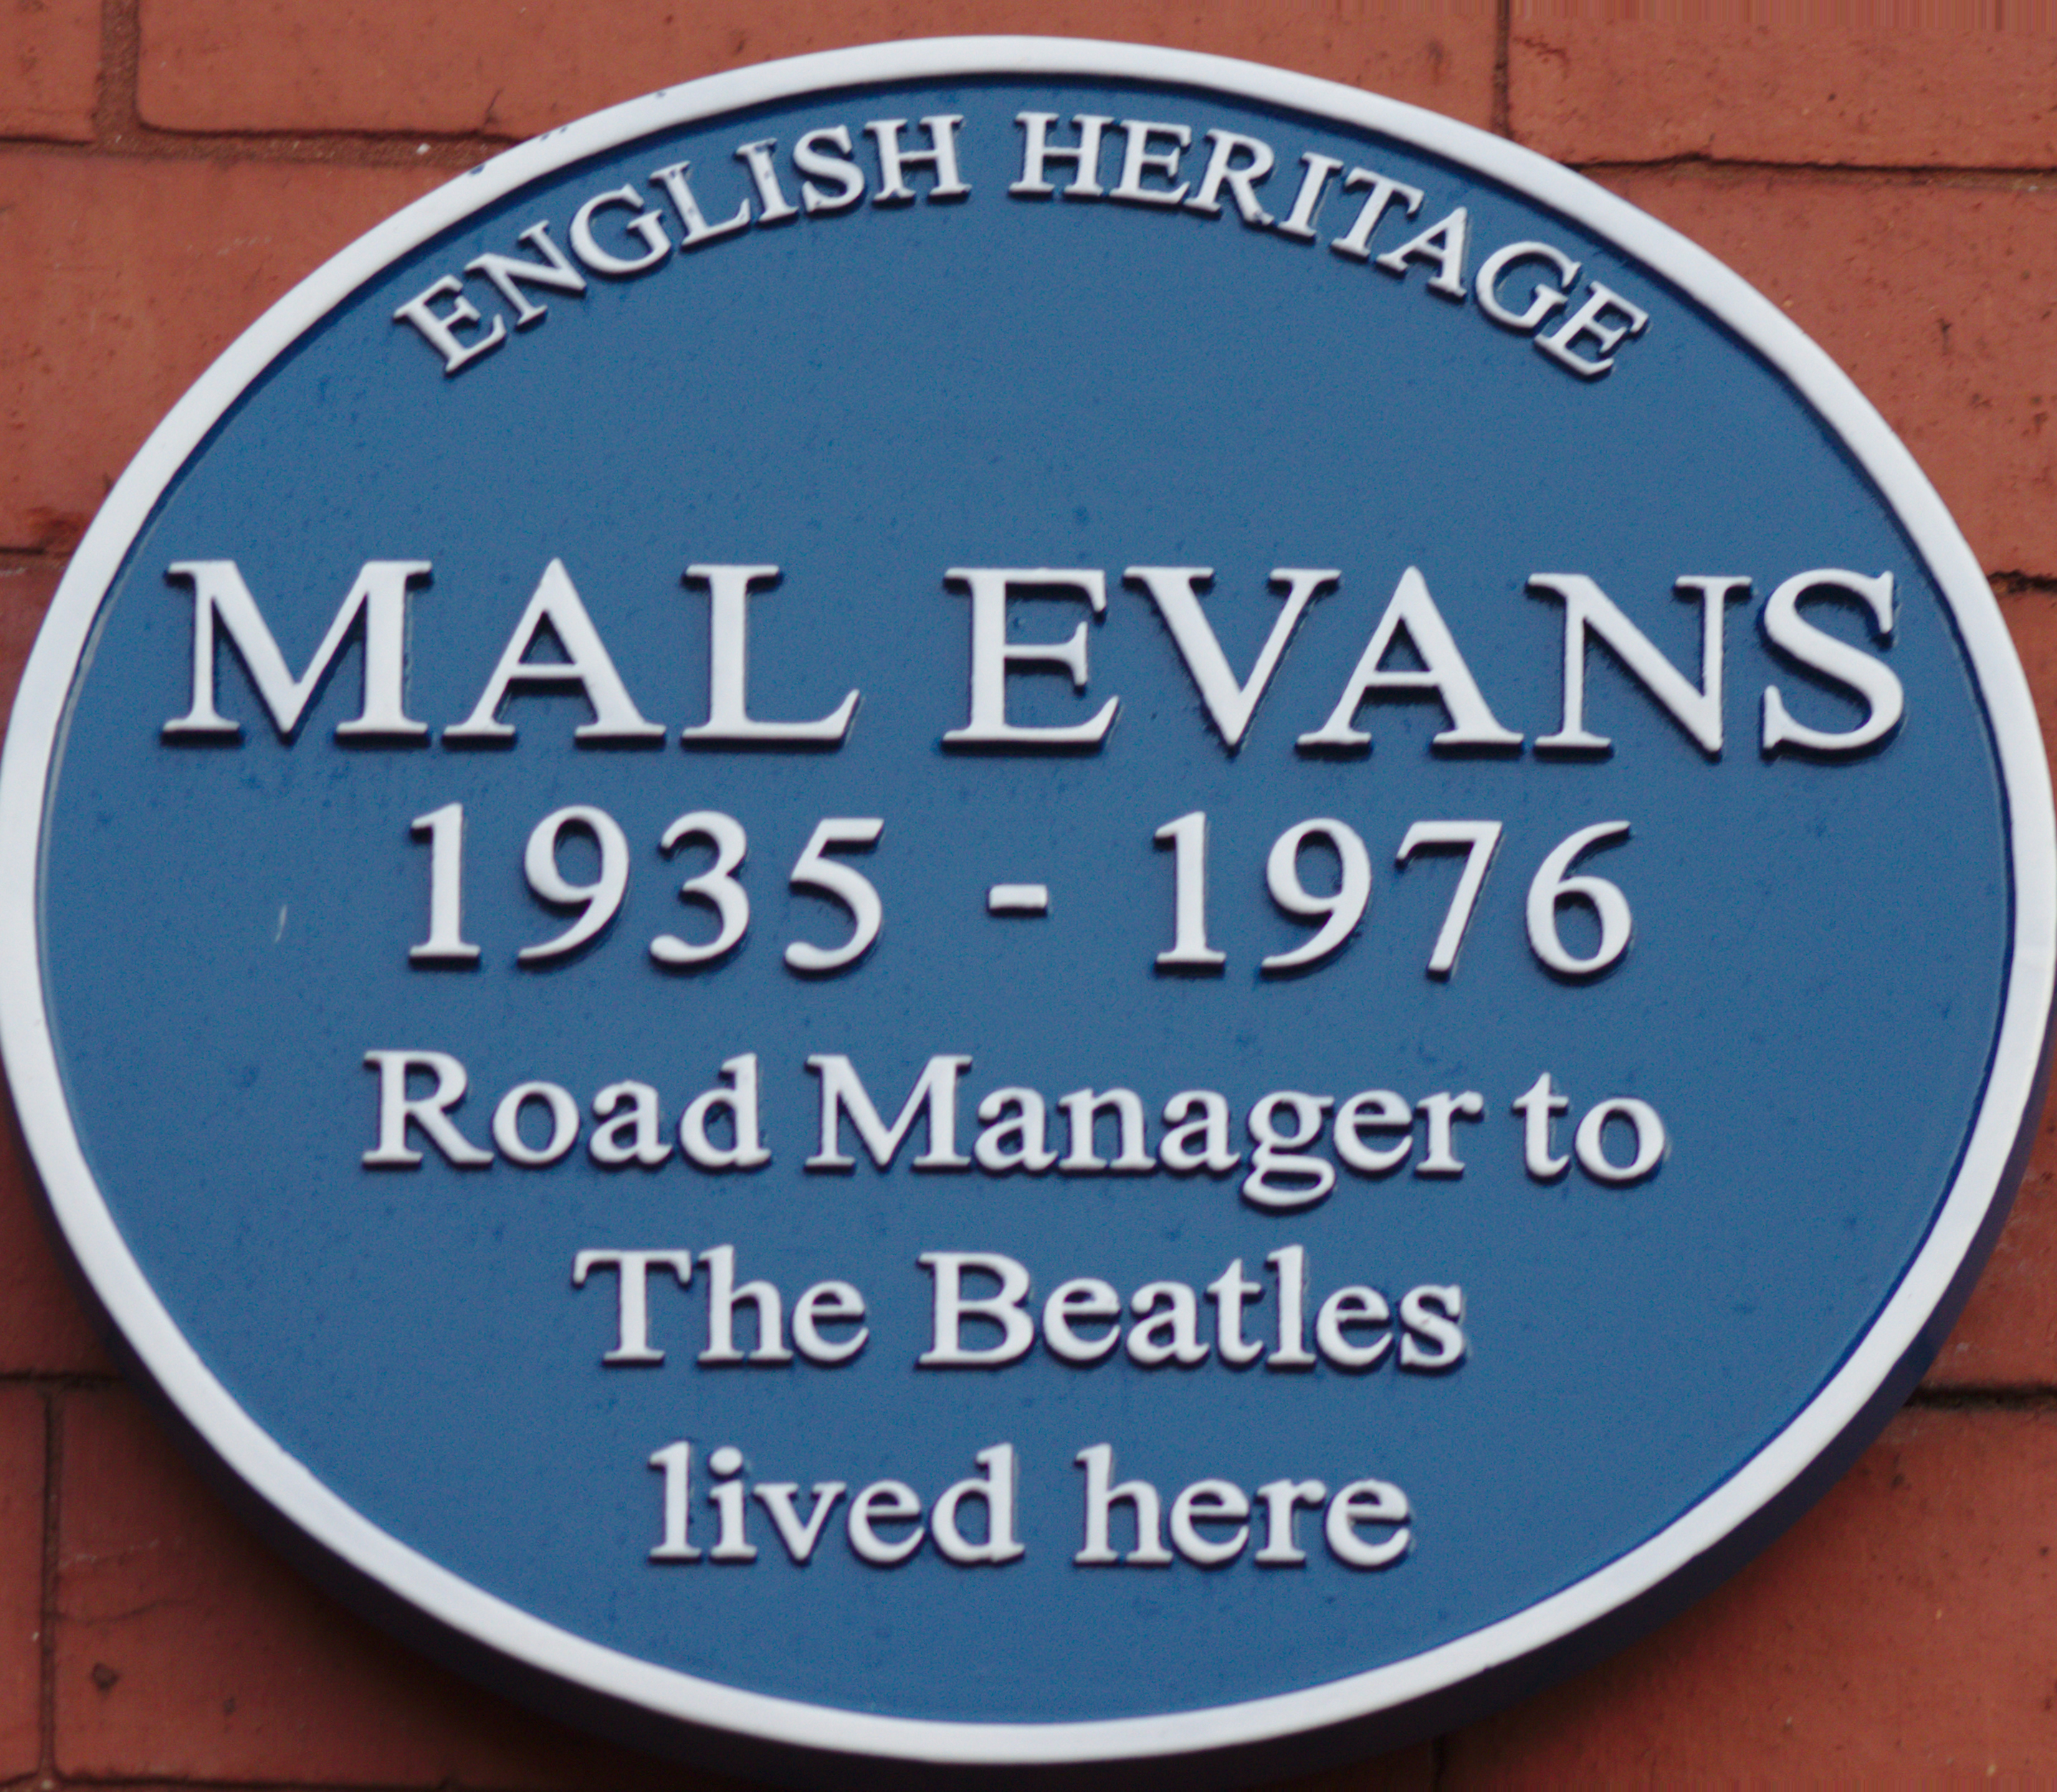 Mal Evans - Wikipedia